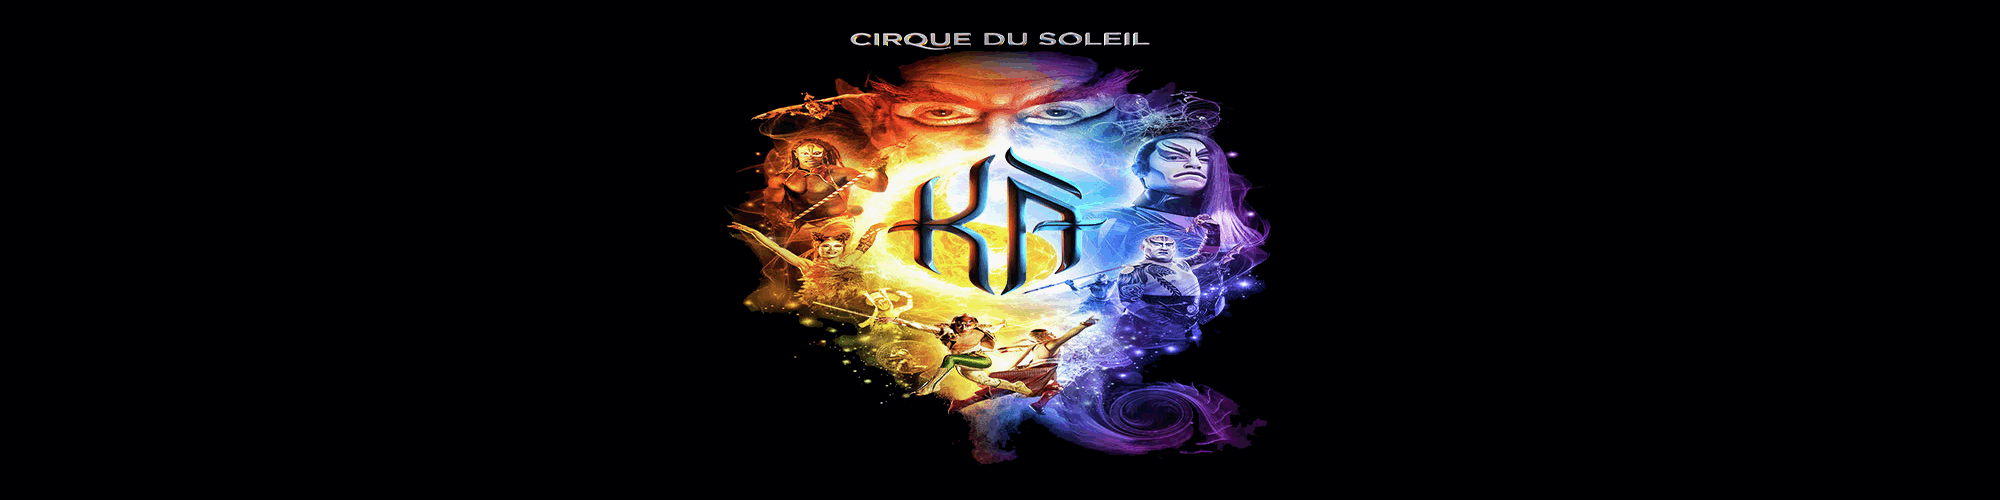 Cirque du Soleil KA - Las Vegas Nevada